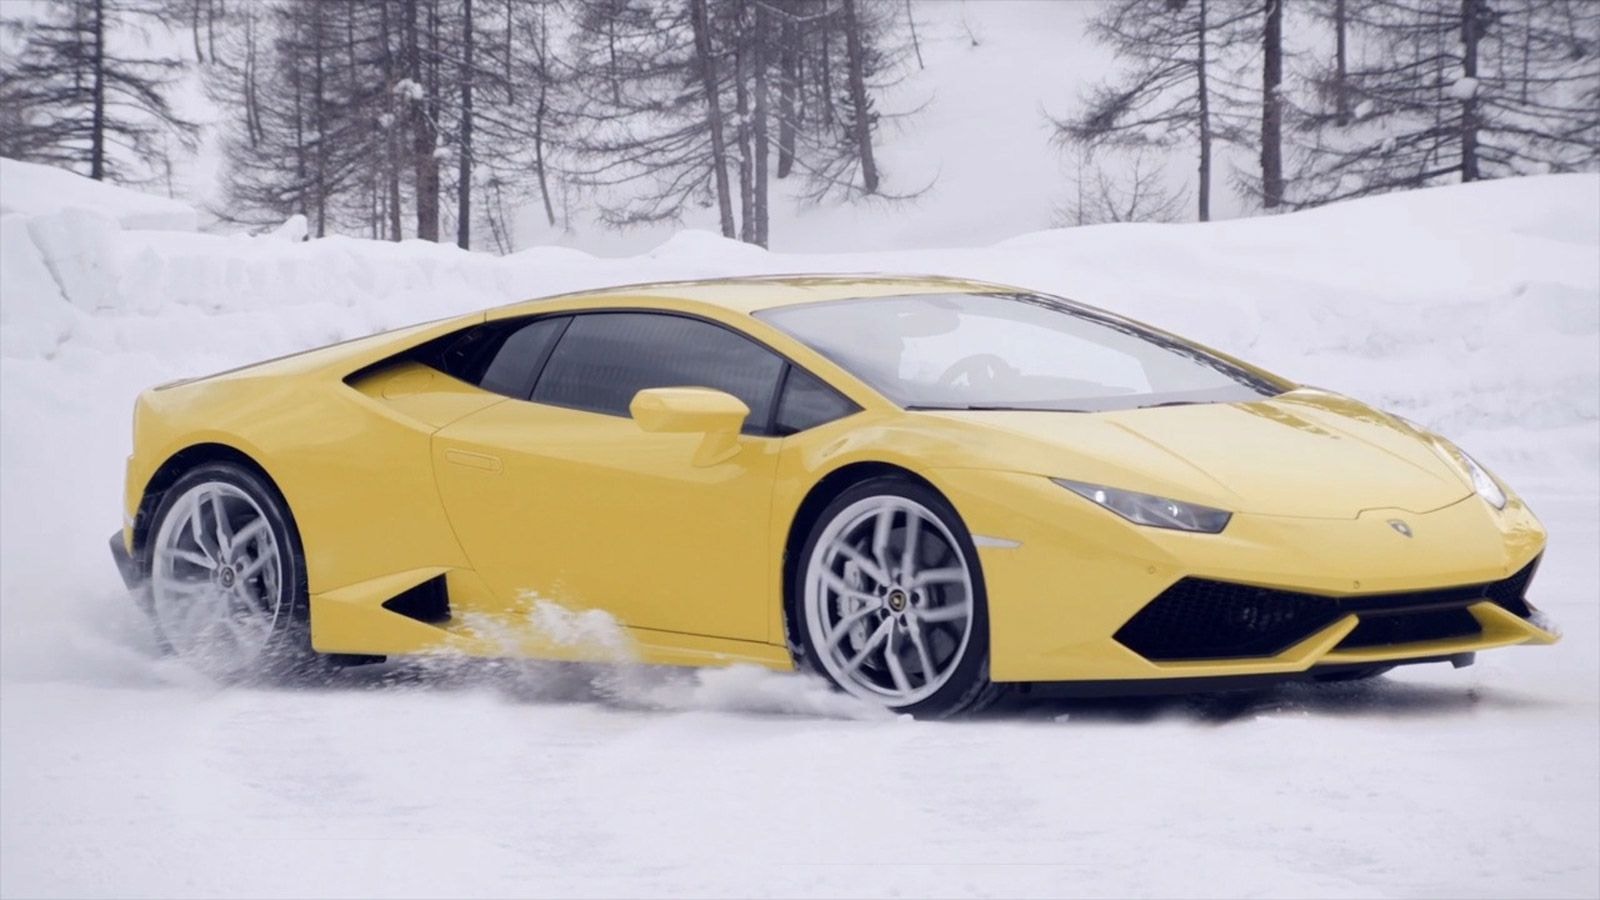 Lamborghini Huracán at Winter Driving Academy